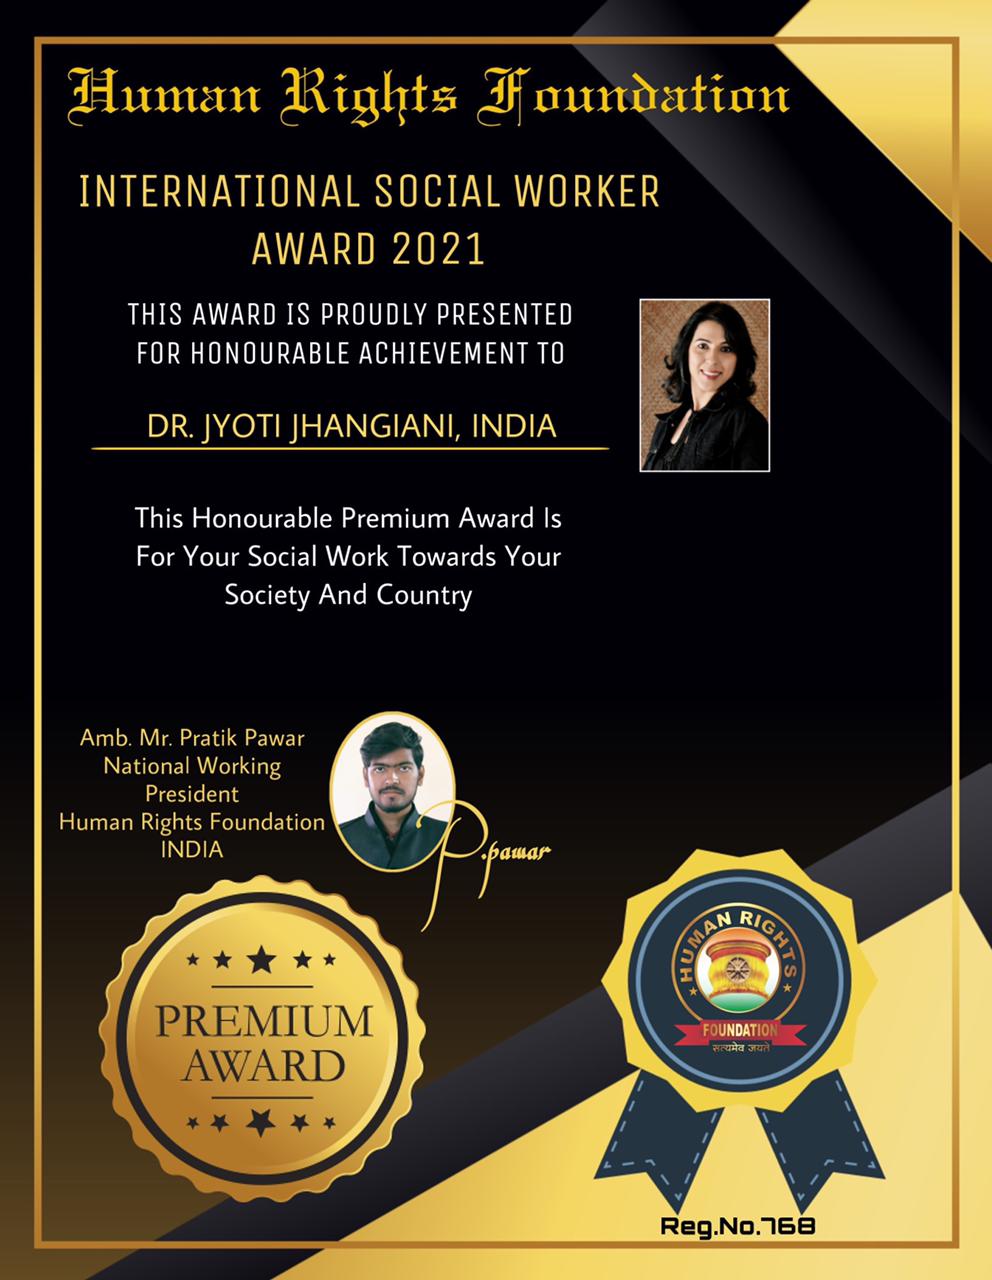 6-International Social Worker Award 2021